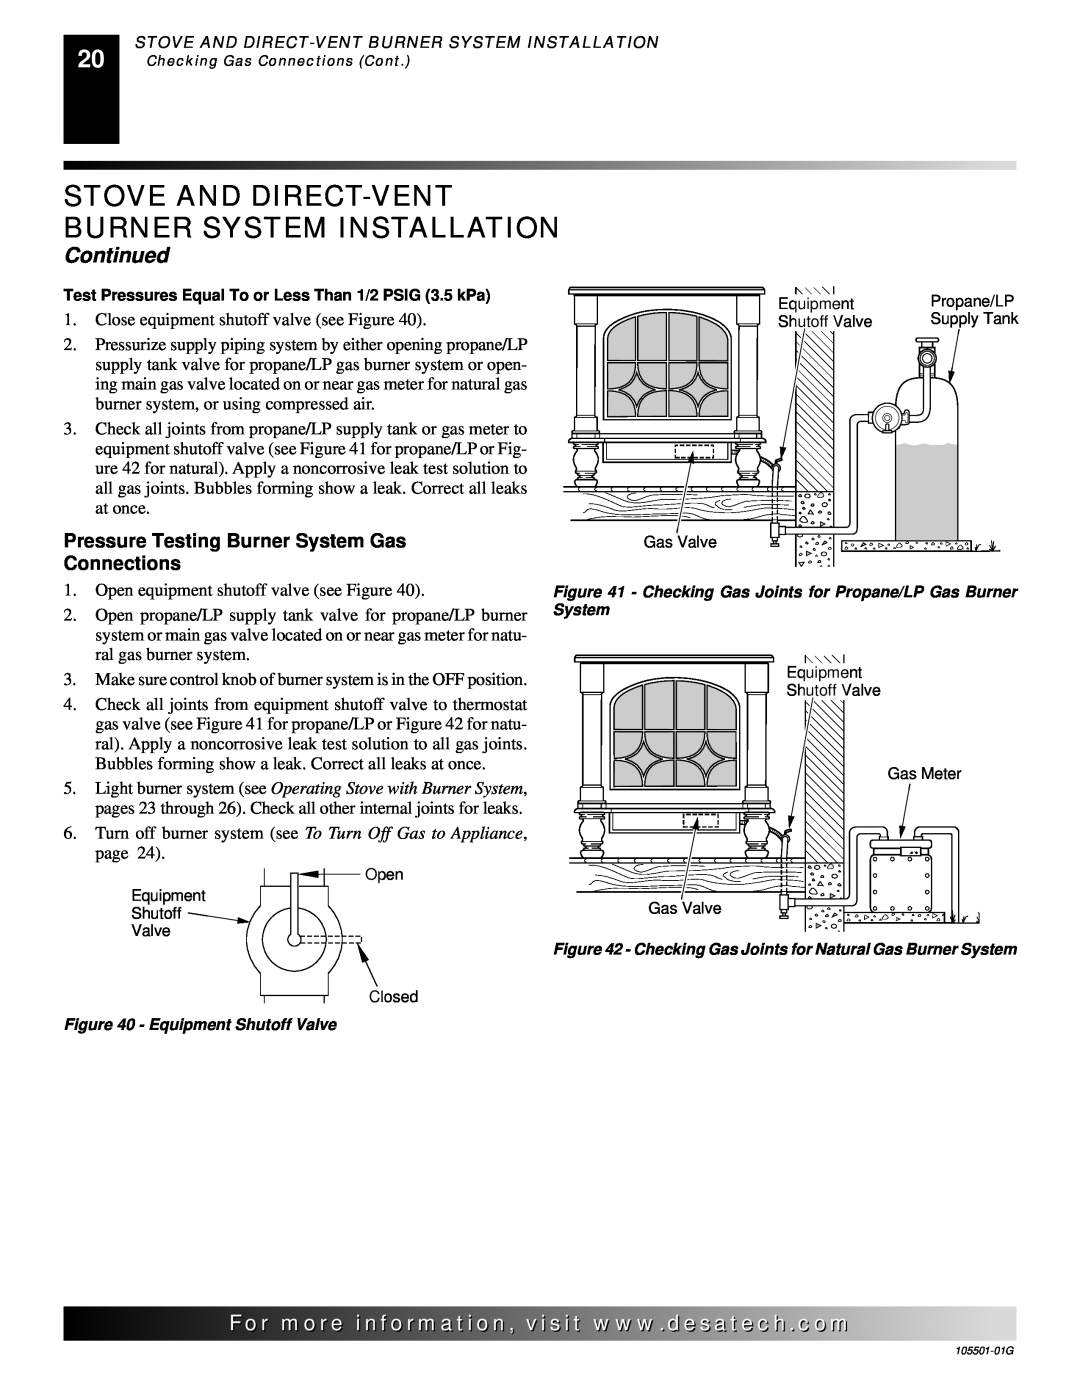 Desa Tech CDVBNC, CDVBPC manual Continued, For..com, Pressure Testing Burner System Gas Connections 